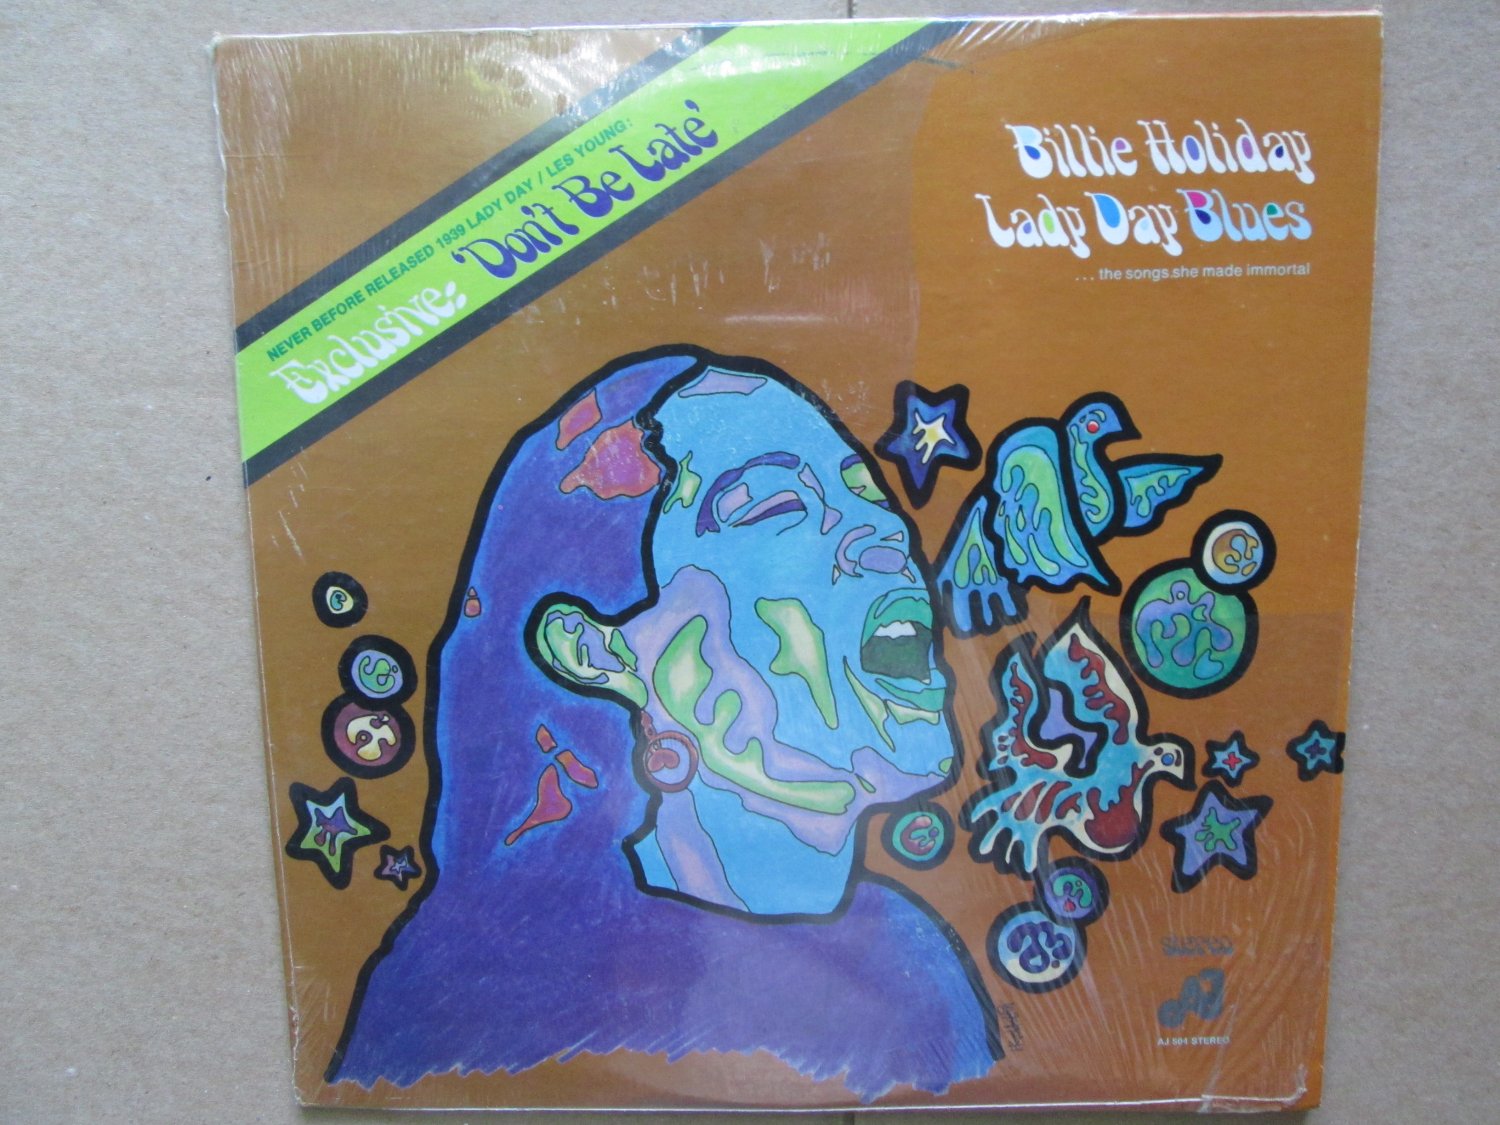 *Billie Holiday*     Lady Day Blues    *Compilation*    1972 Ala